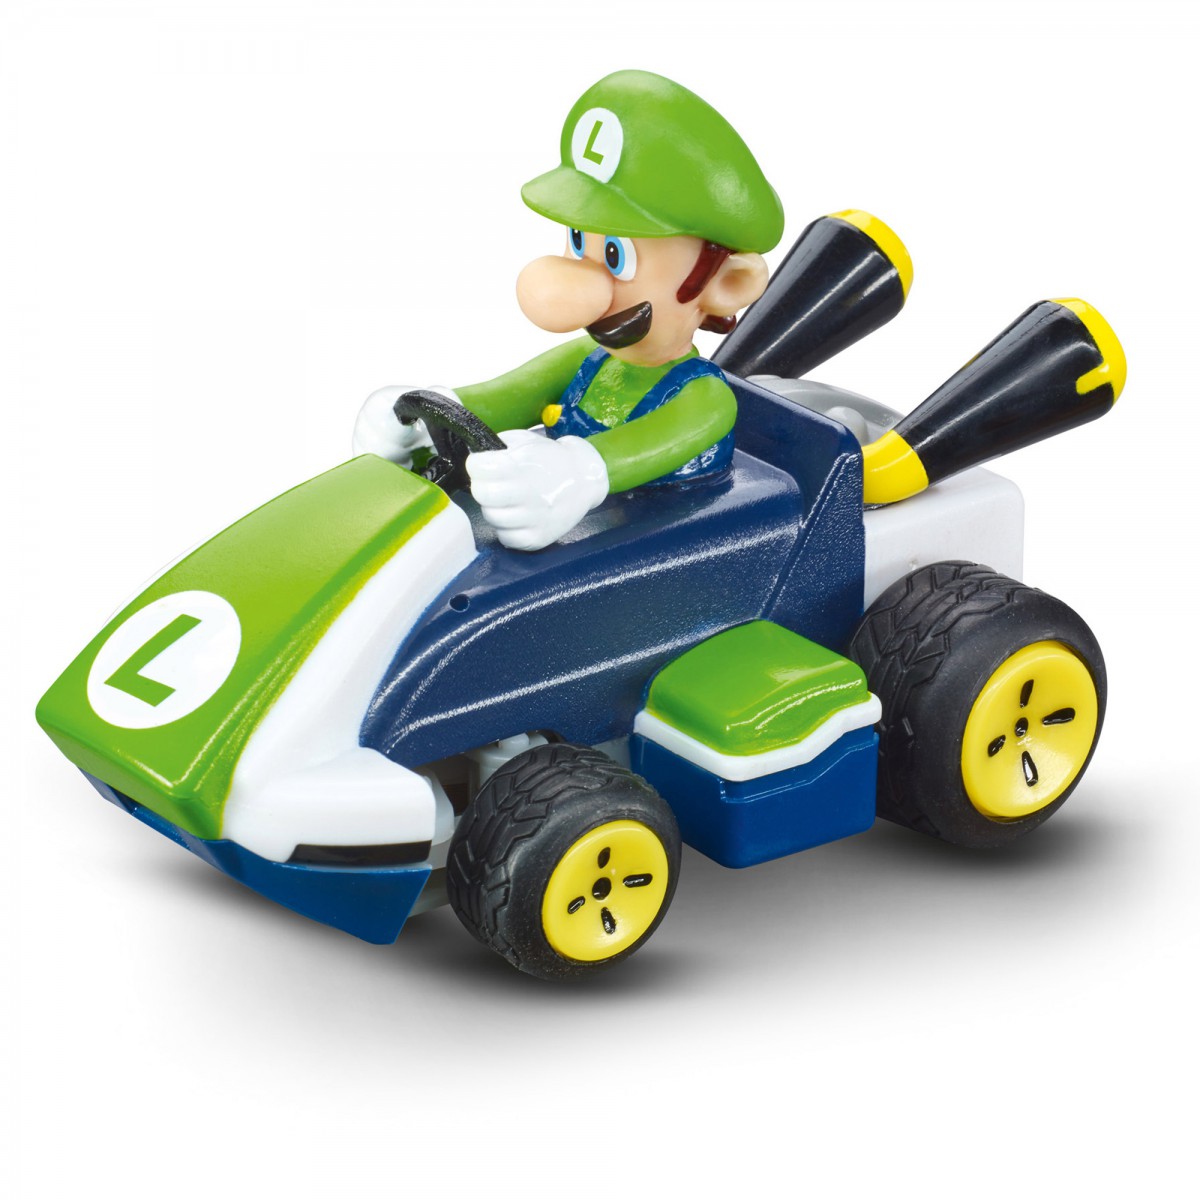 Mario Kart Mini Remote Control Luigi Racer at Toys R Us UK